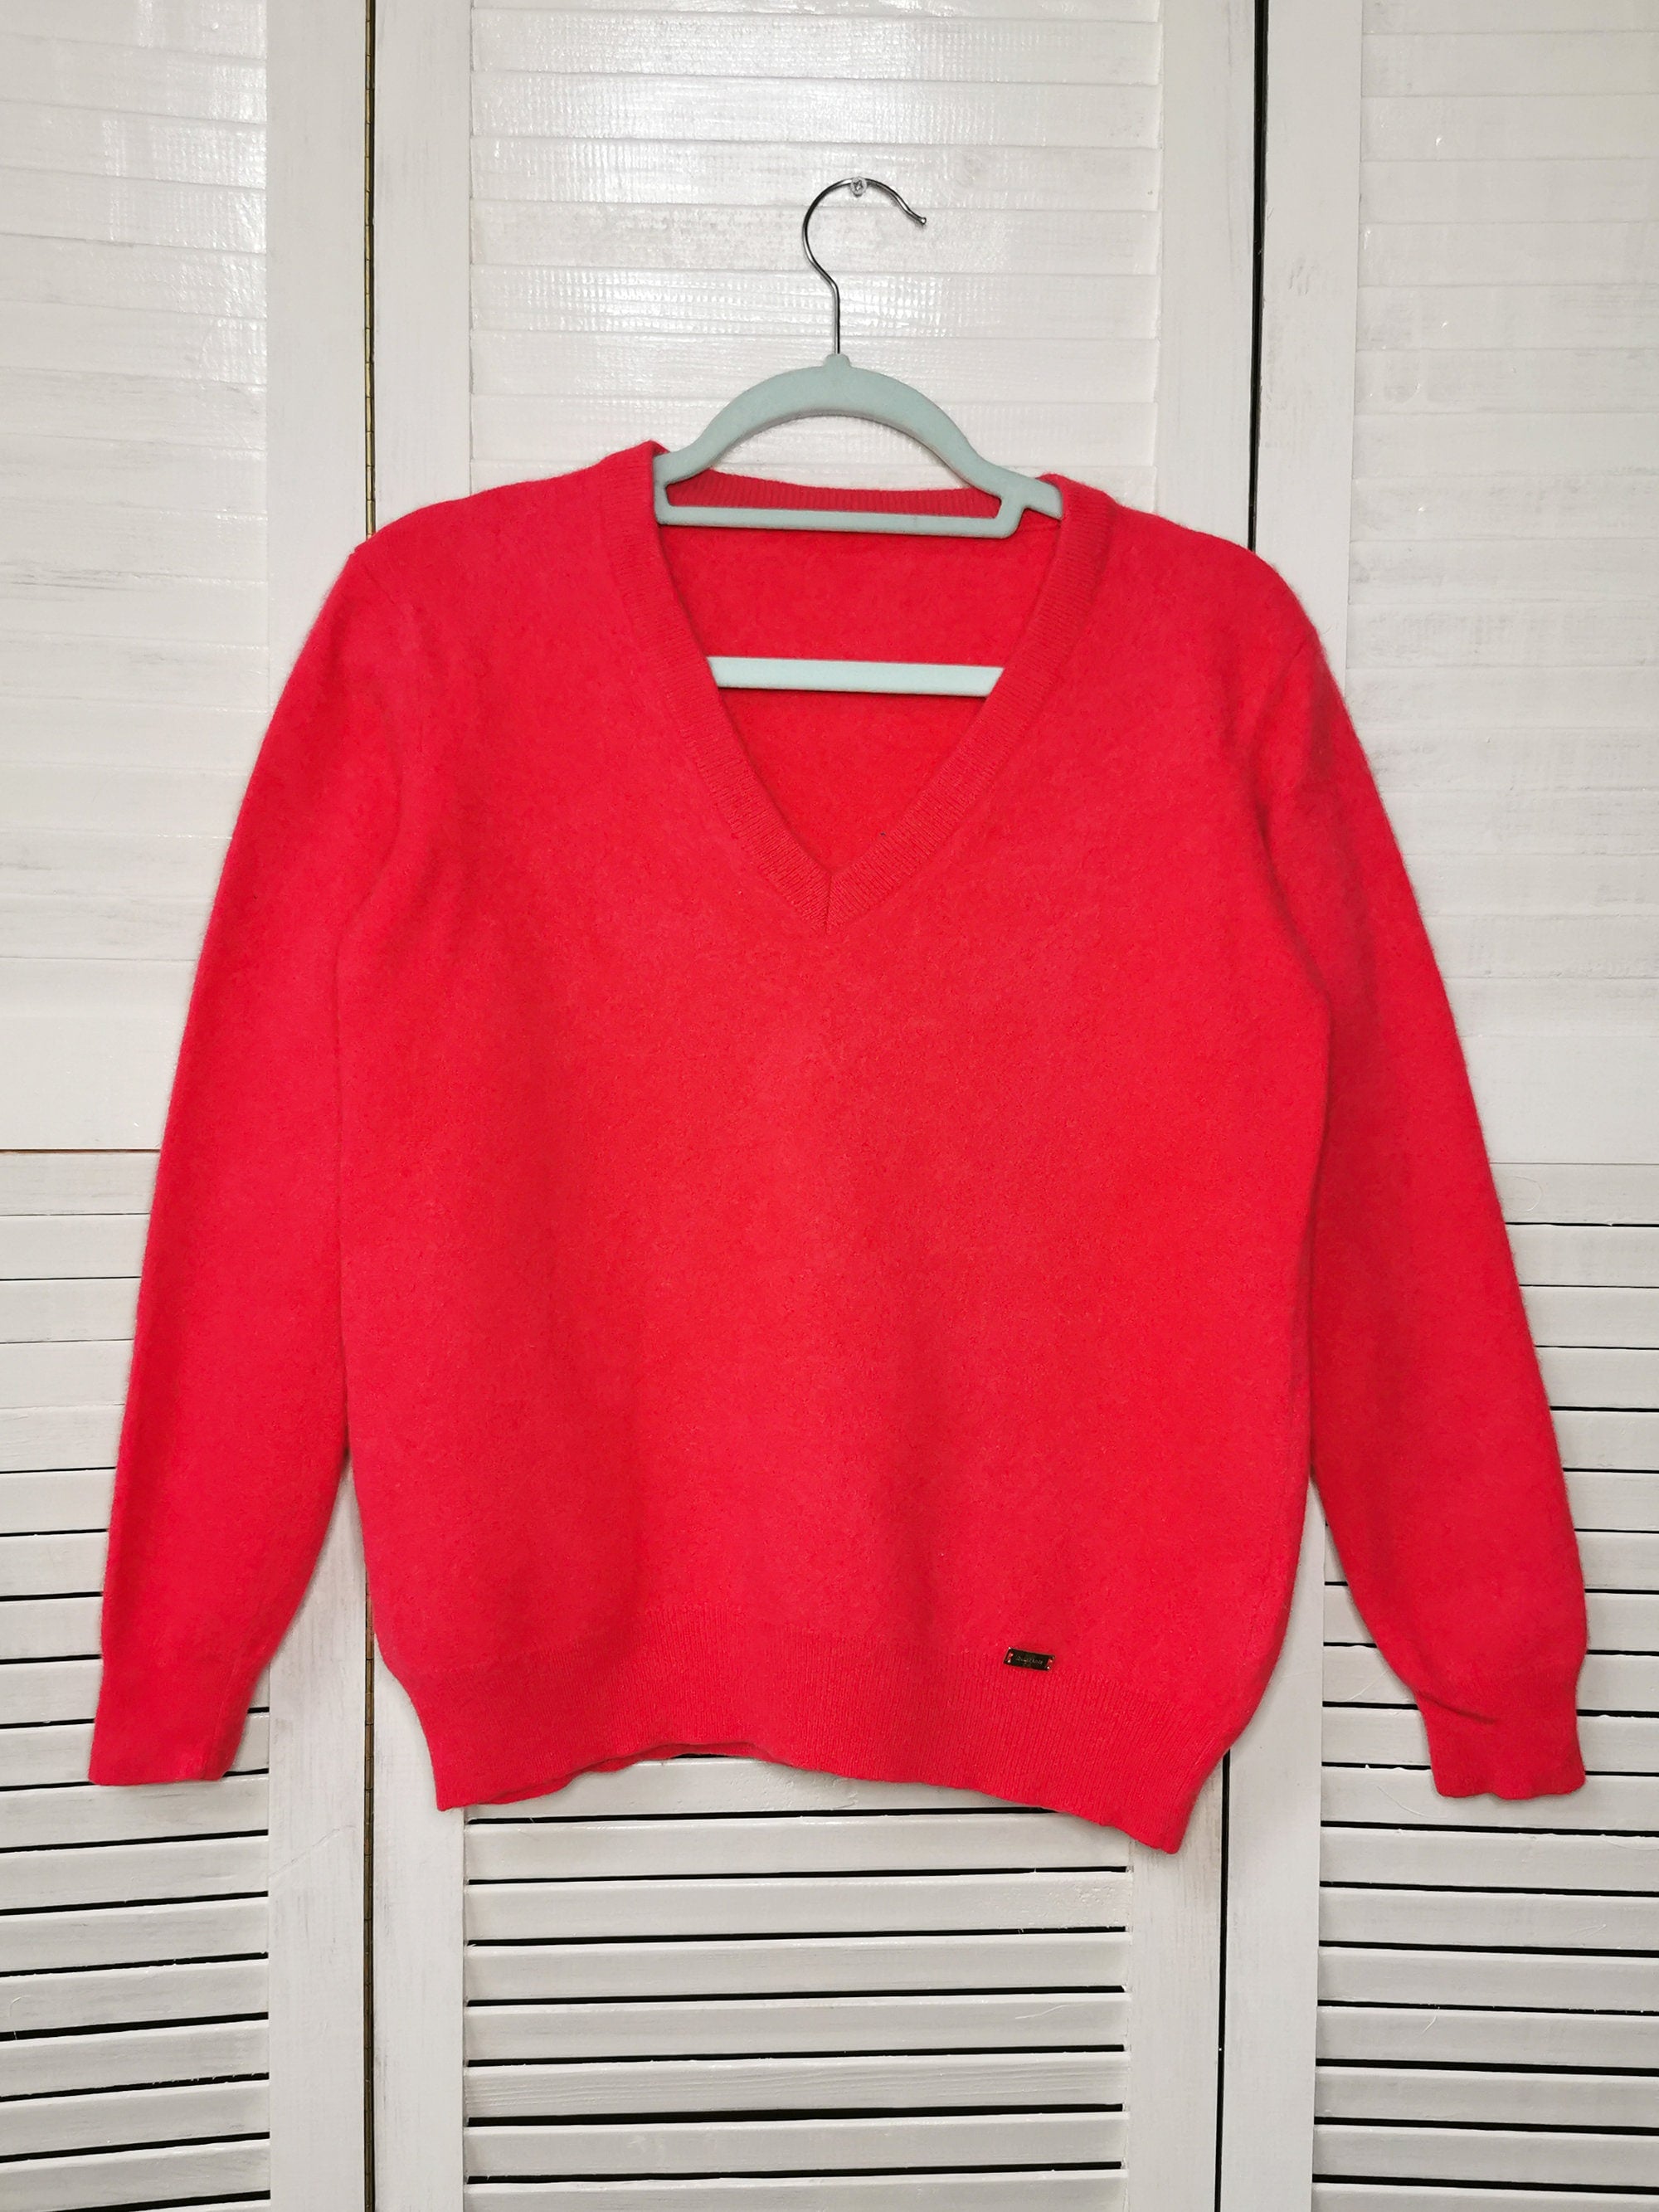 Vintage 90s minimalist pink cashmere jumper